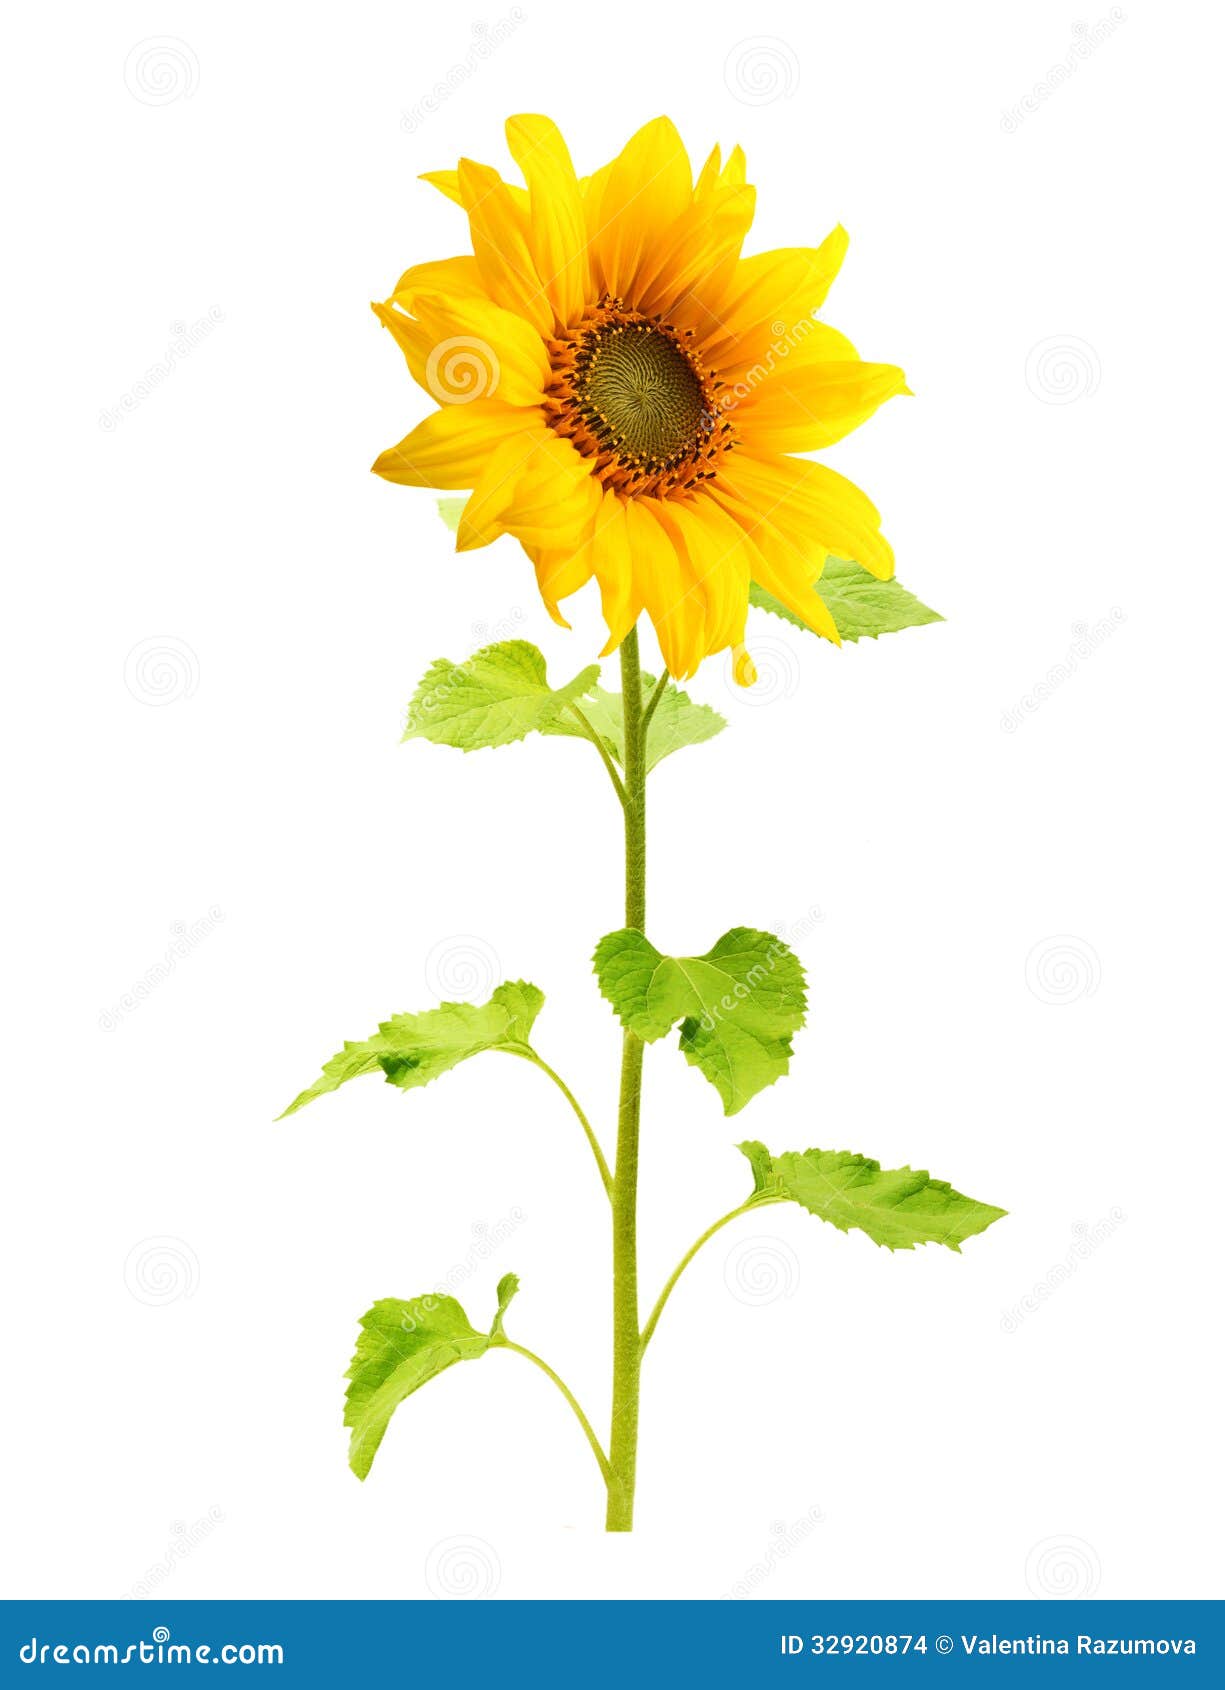 Sunflower plant isolated stock photo. Image of closeup - 32920874